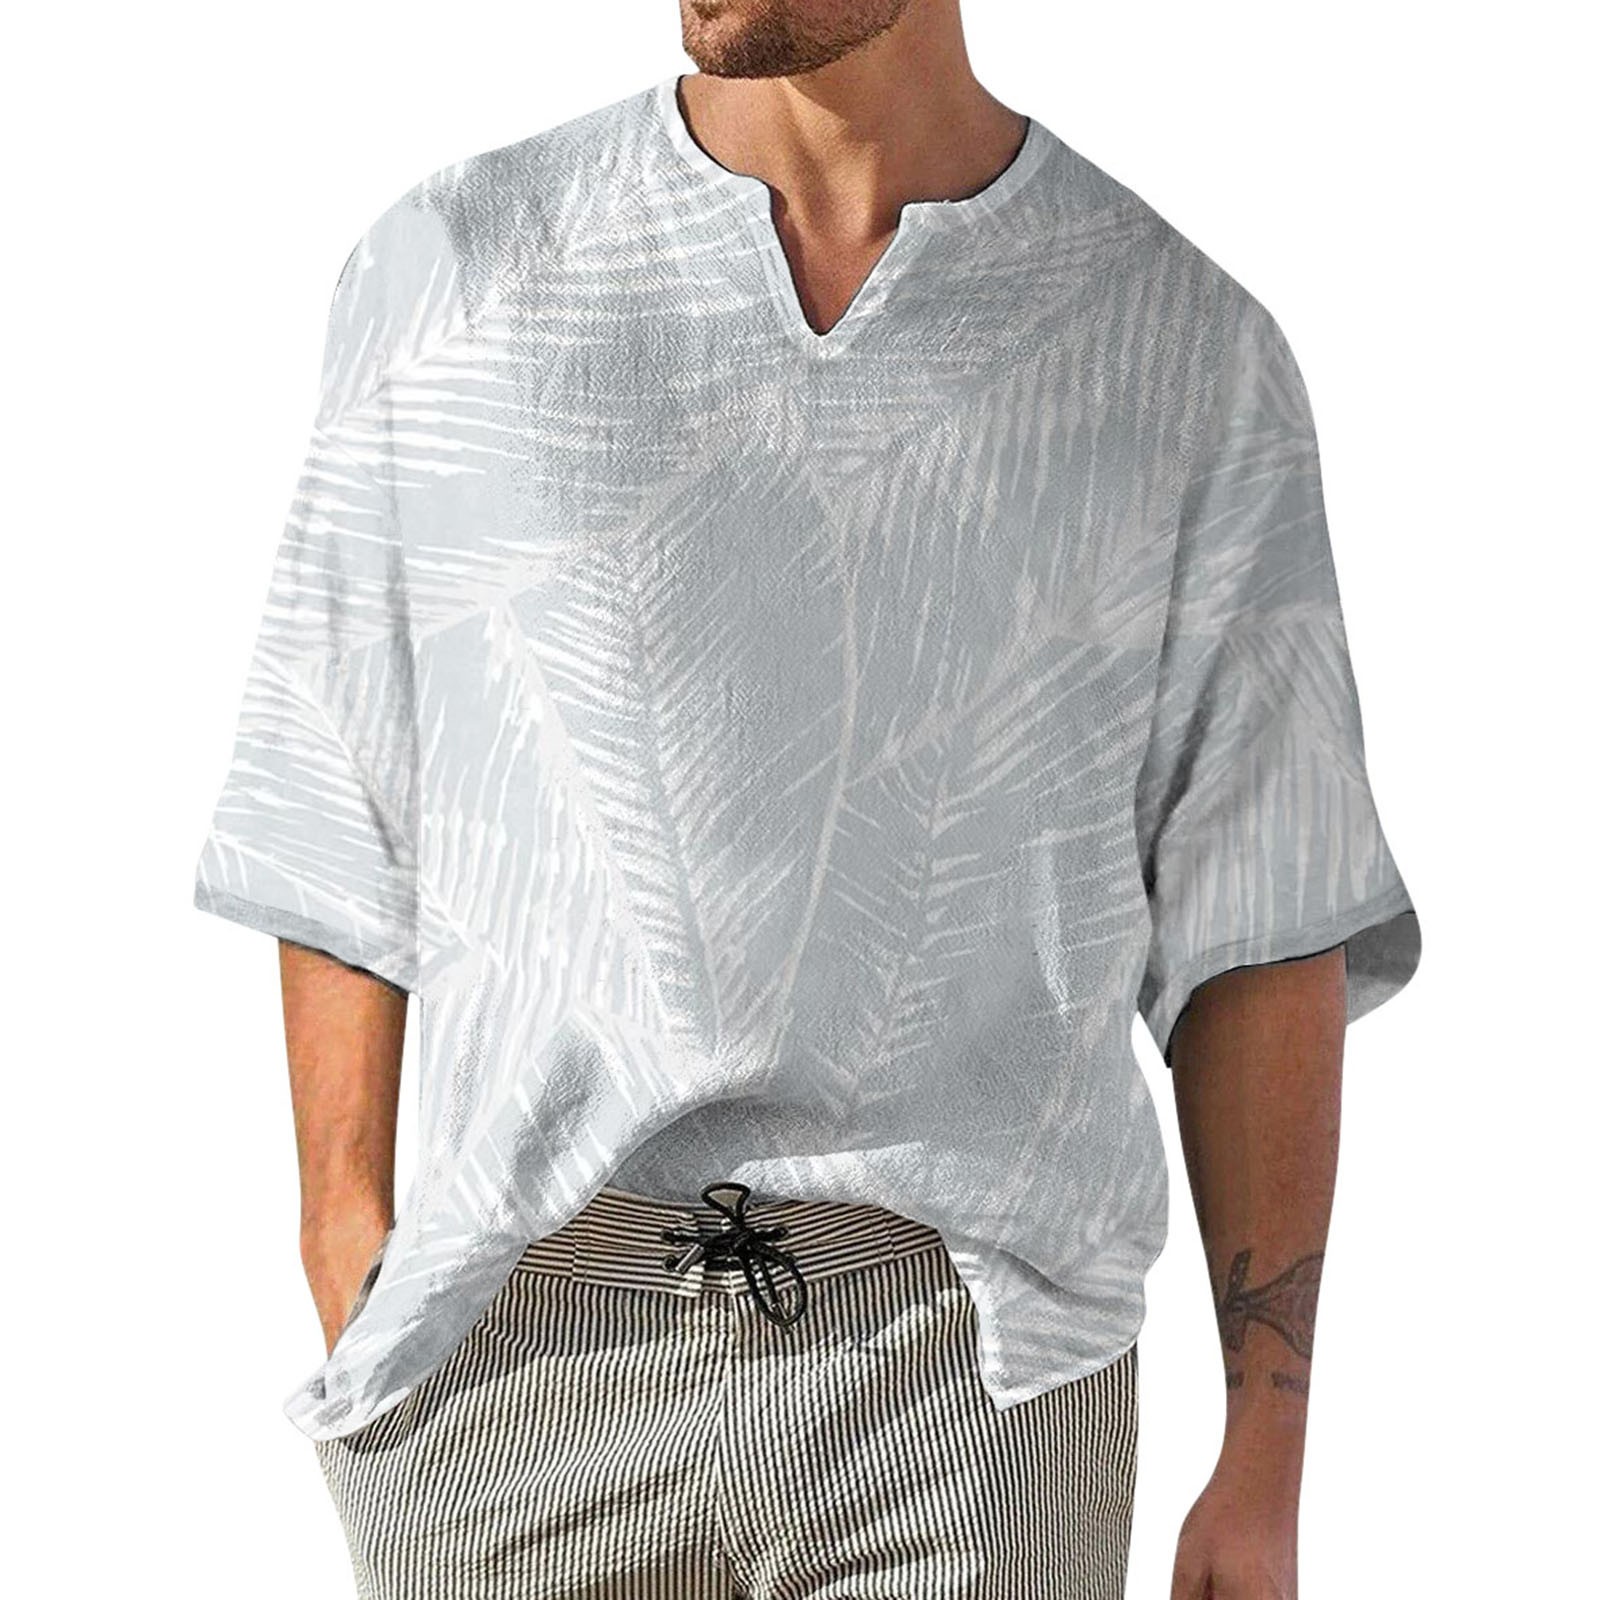 AdBFJAF Vintage Shirts for Men Graphic Tees Mens Summer Fashion Casual ...